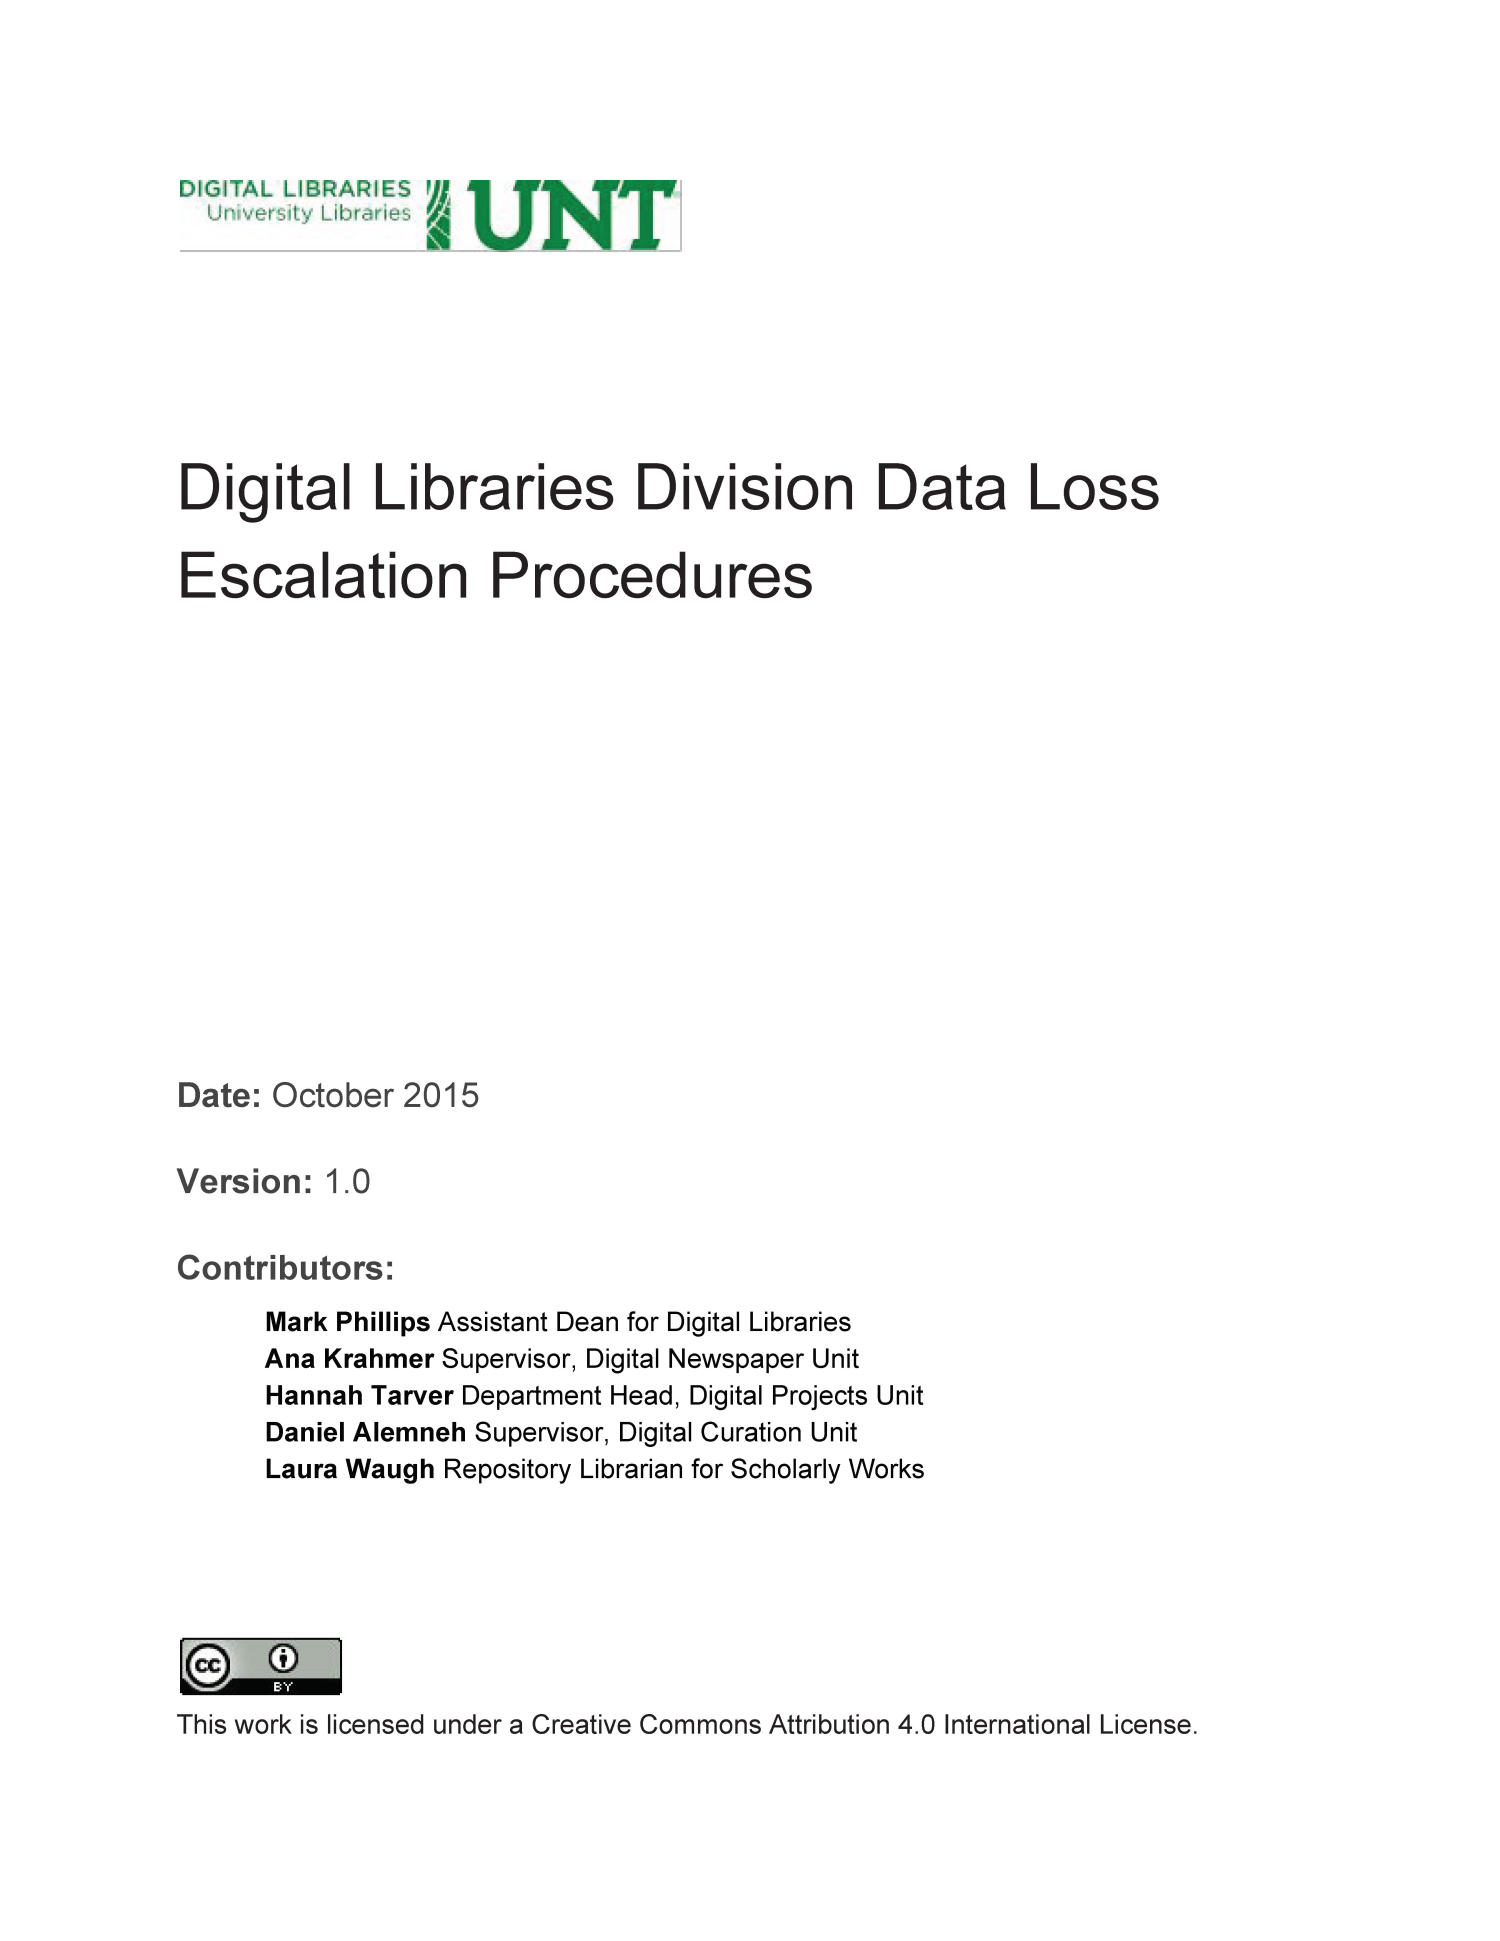 Appendix R: Digital Libraries Division Data Loss Escalation Procedures
                                                
                                                    None
                                                